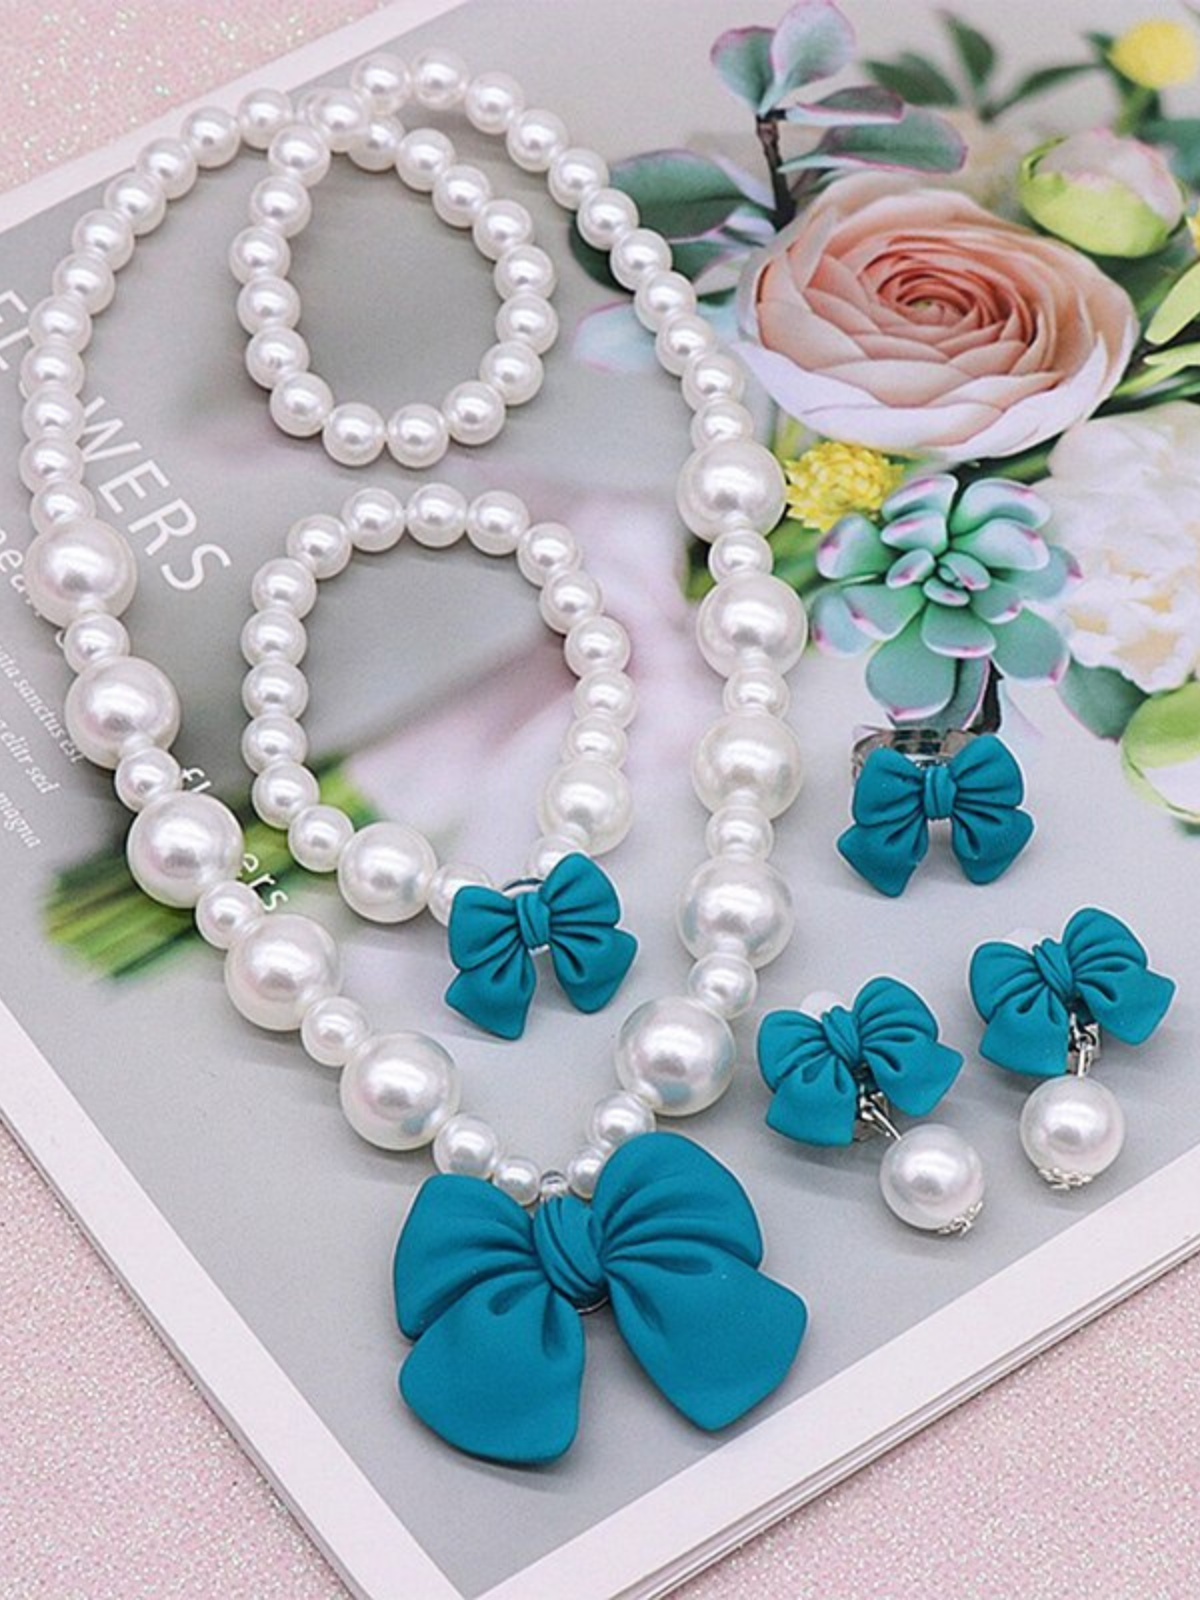 Mia Belle Girls Pearl Jewelry Set | Girls Accessories